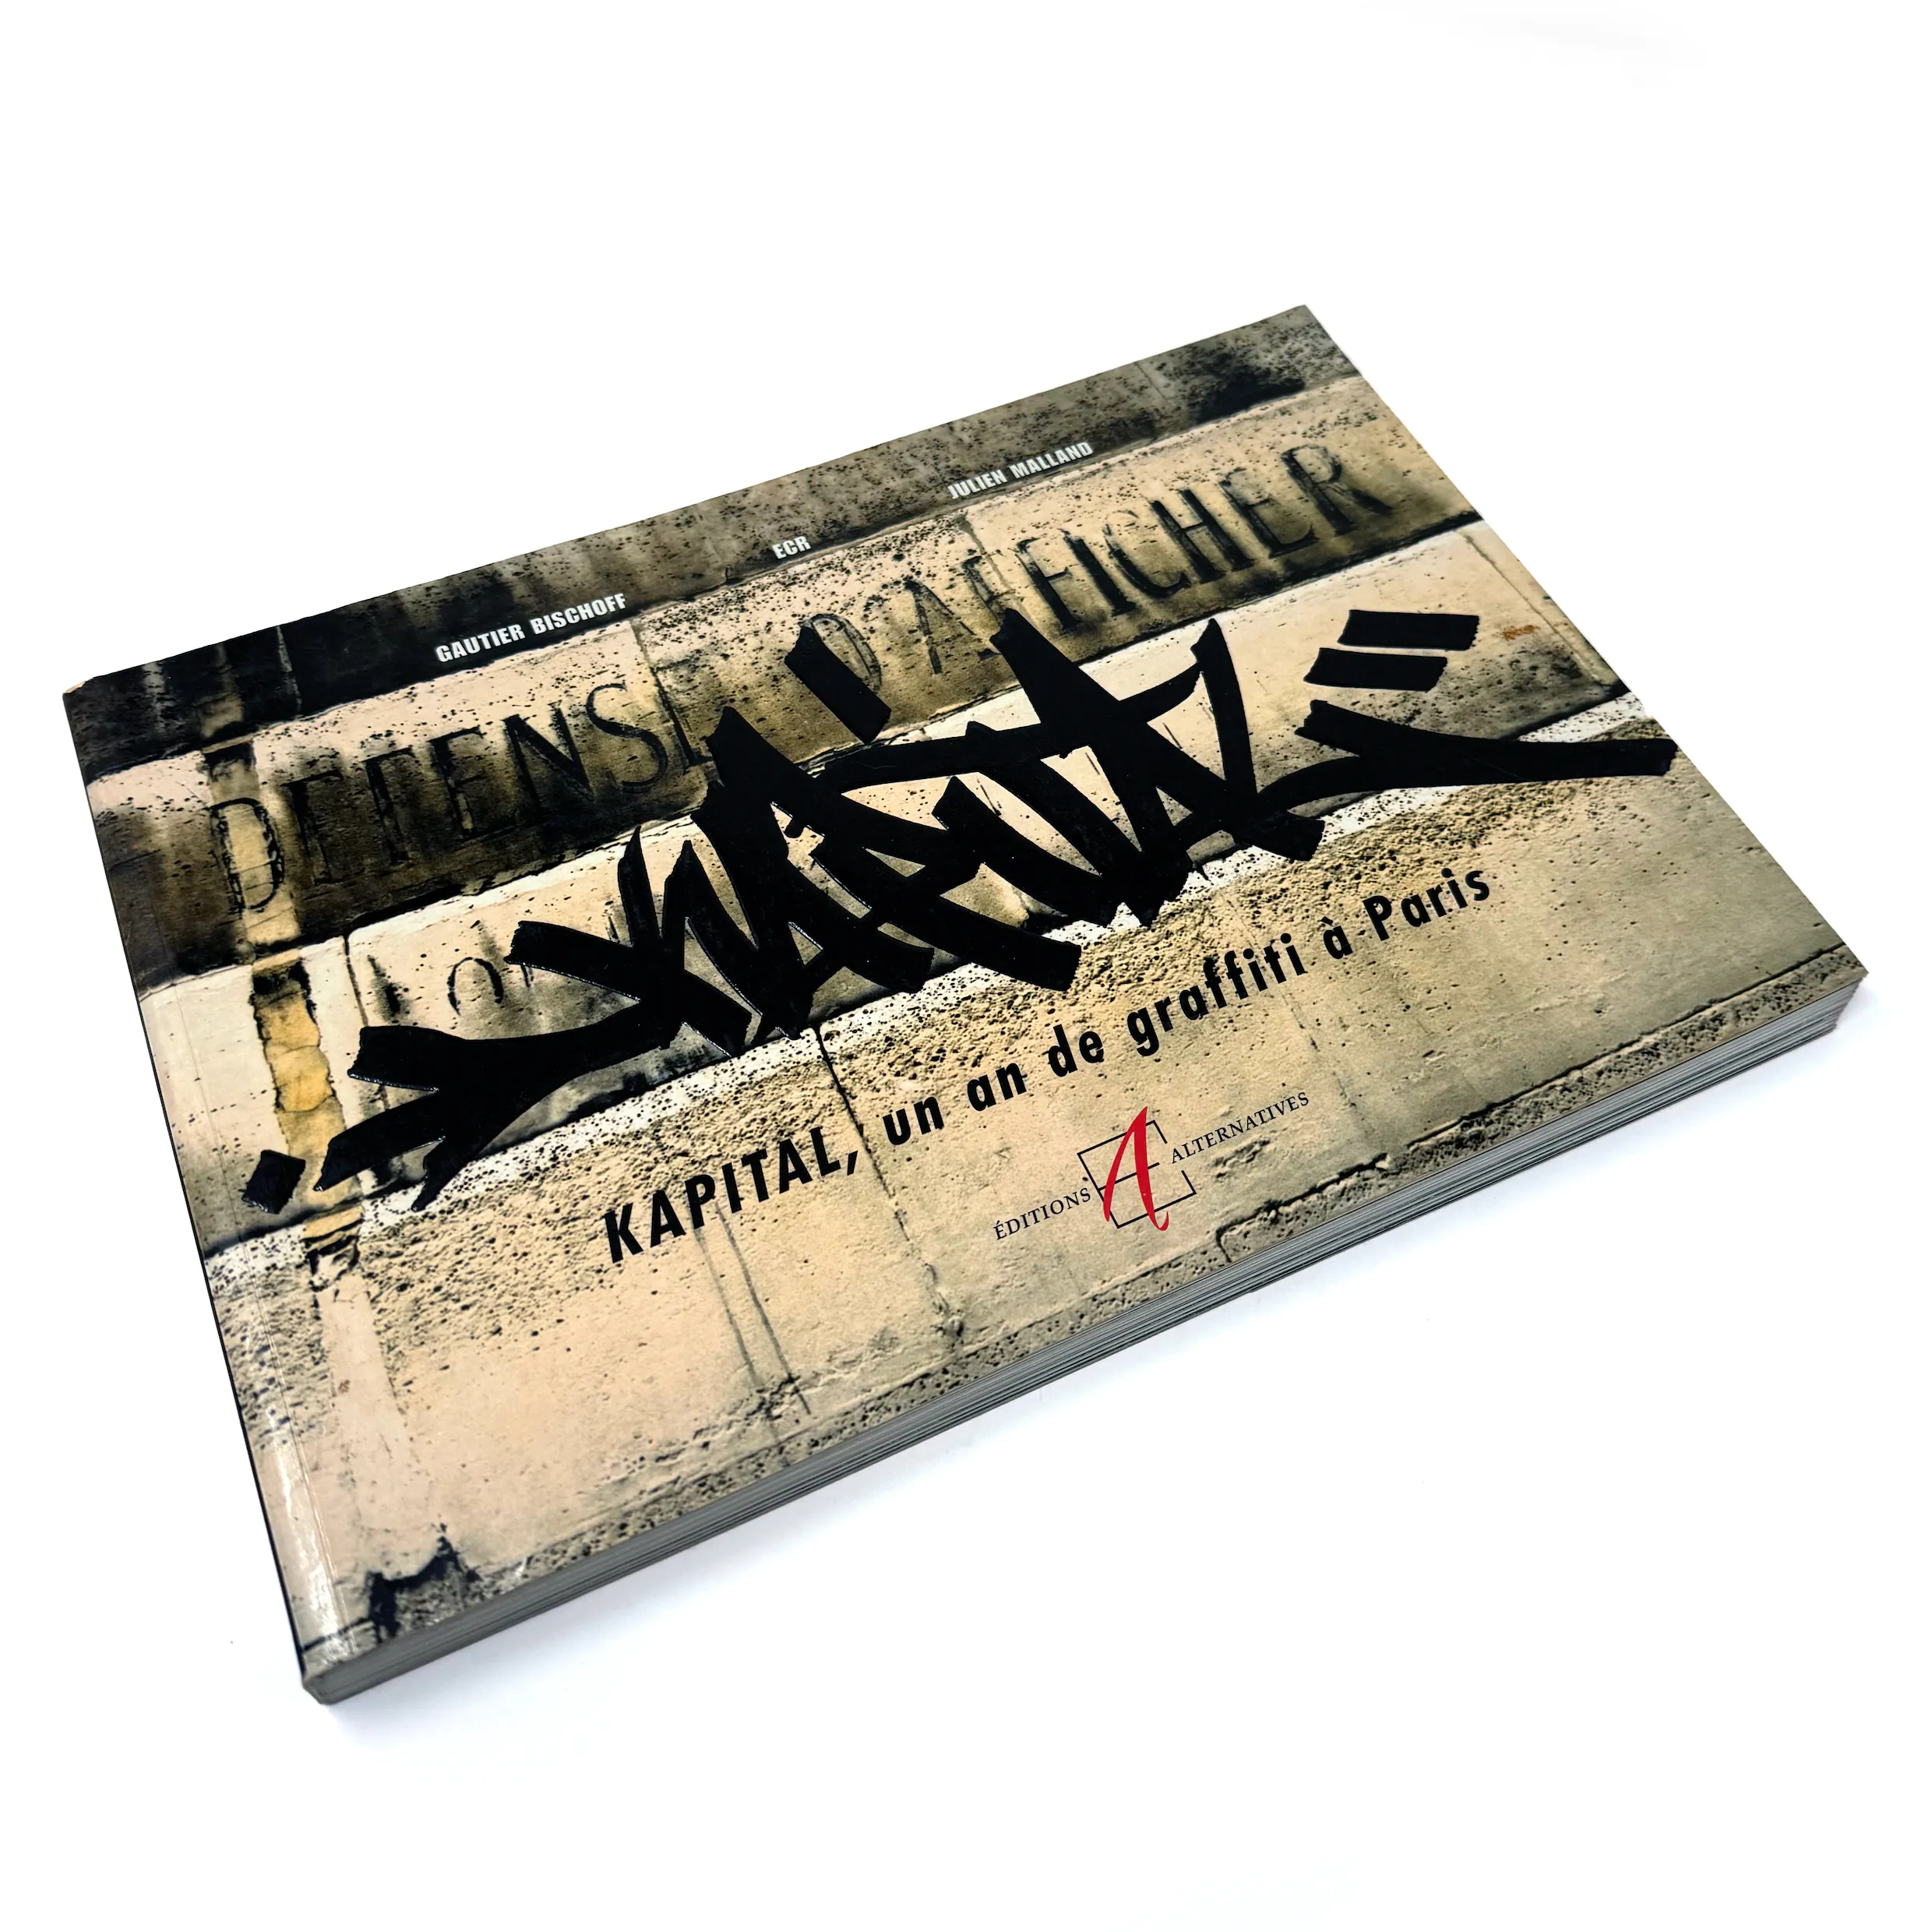 Kapital – 1 year of graffiti in Paris (2003)